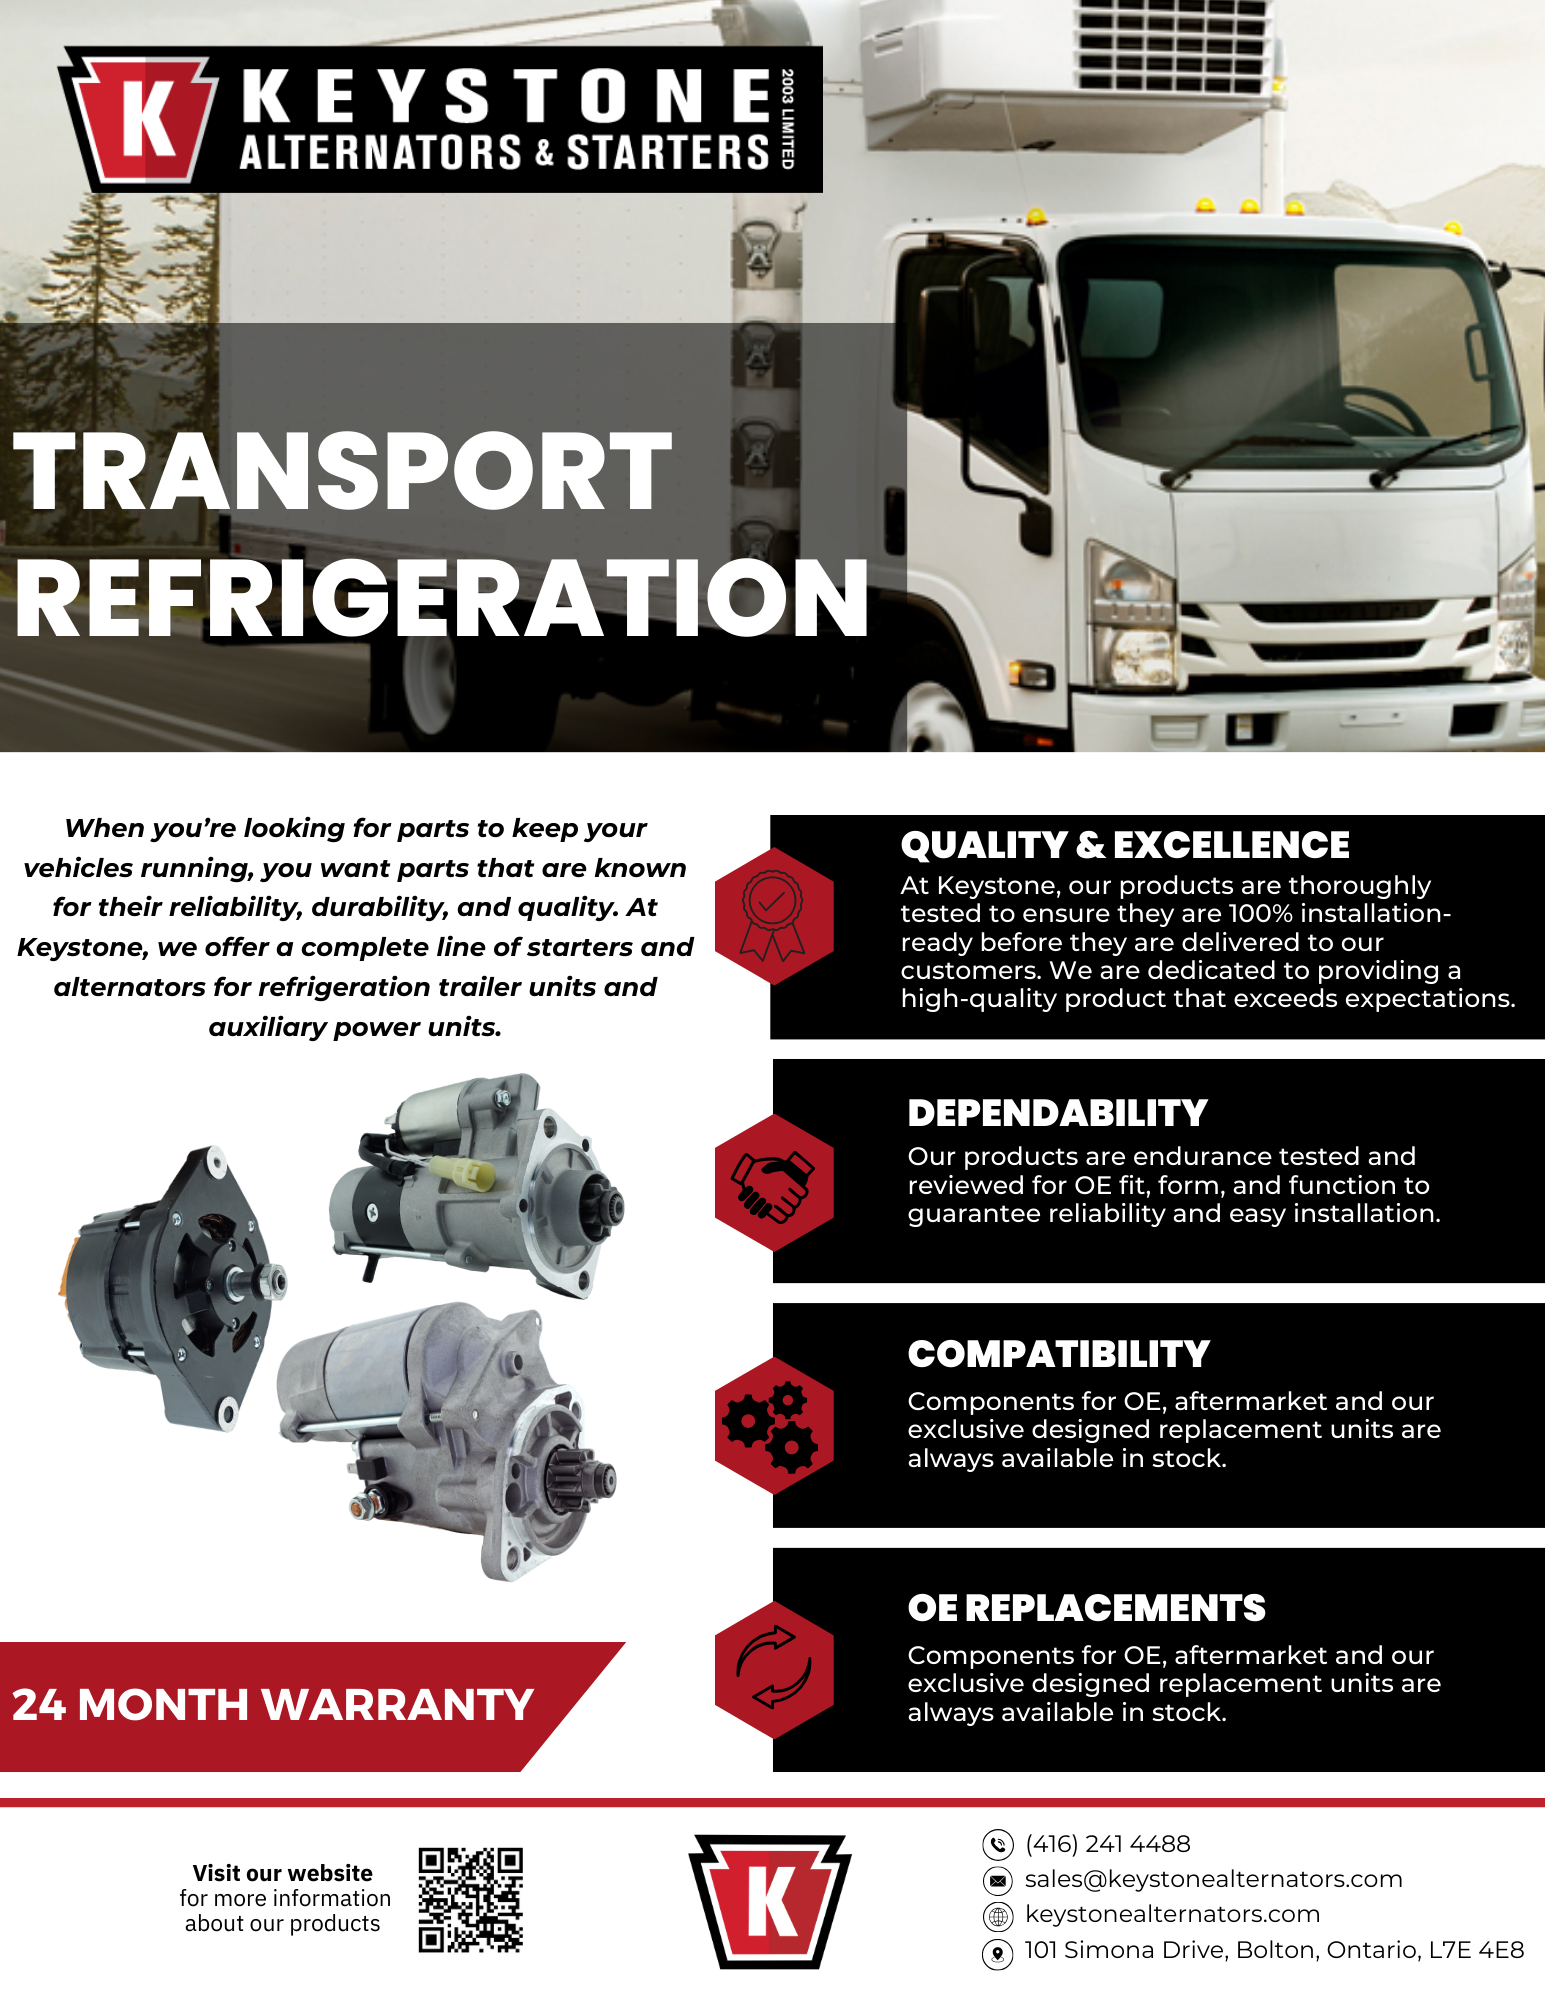 transport refrigeration alternators and starters keystone